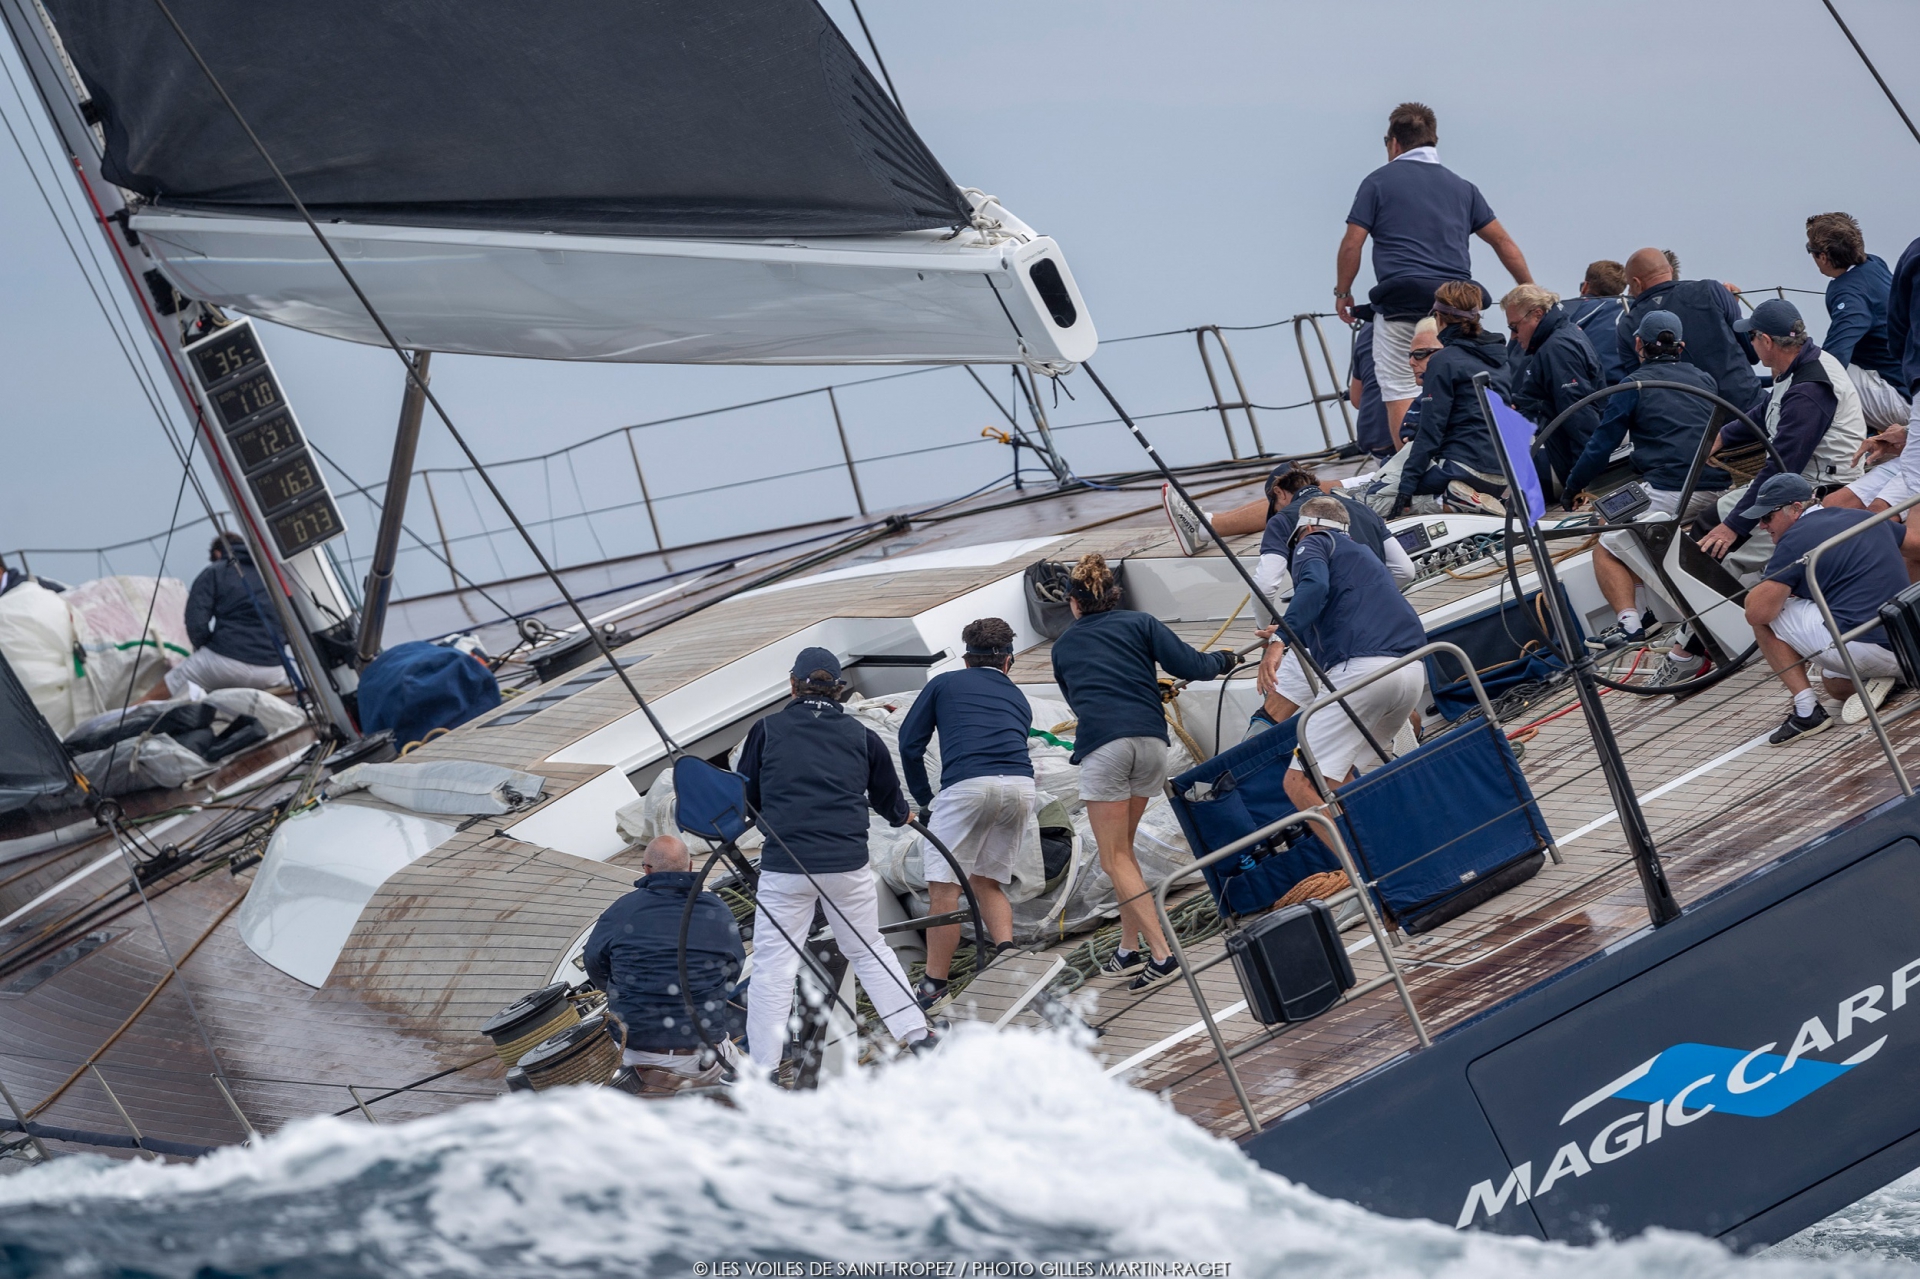 Congratulazioni a Magic Carpet 3 per la vittoria a Les Voiles de Saint-Tropez - NEWS - Yacht Club Costa Smeralda